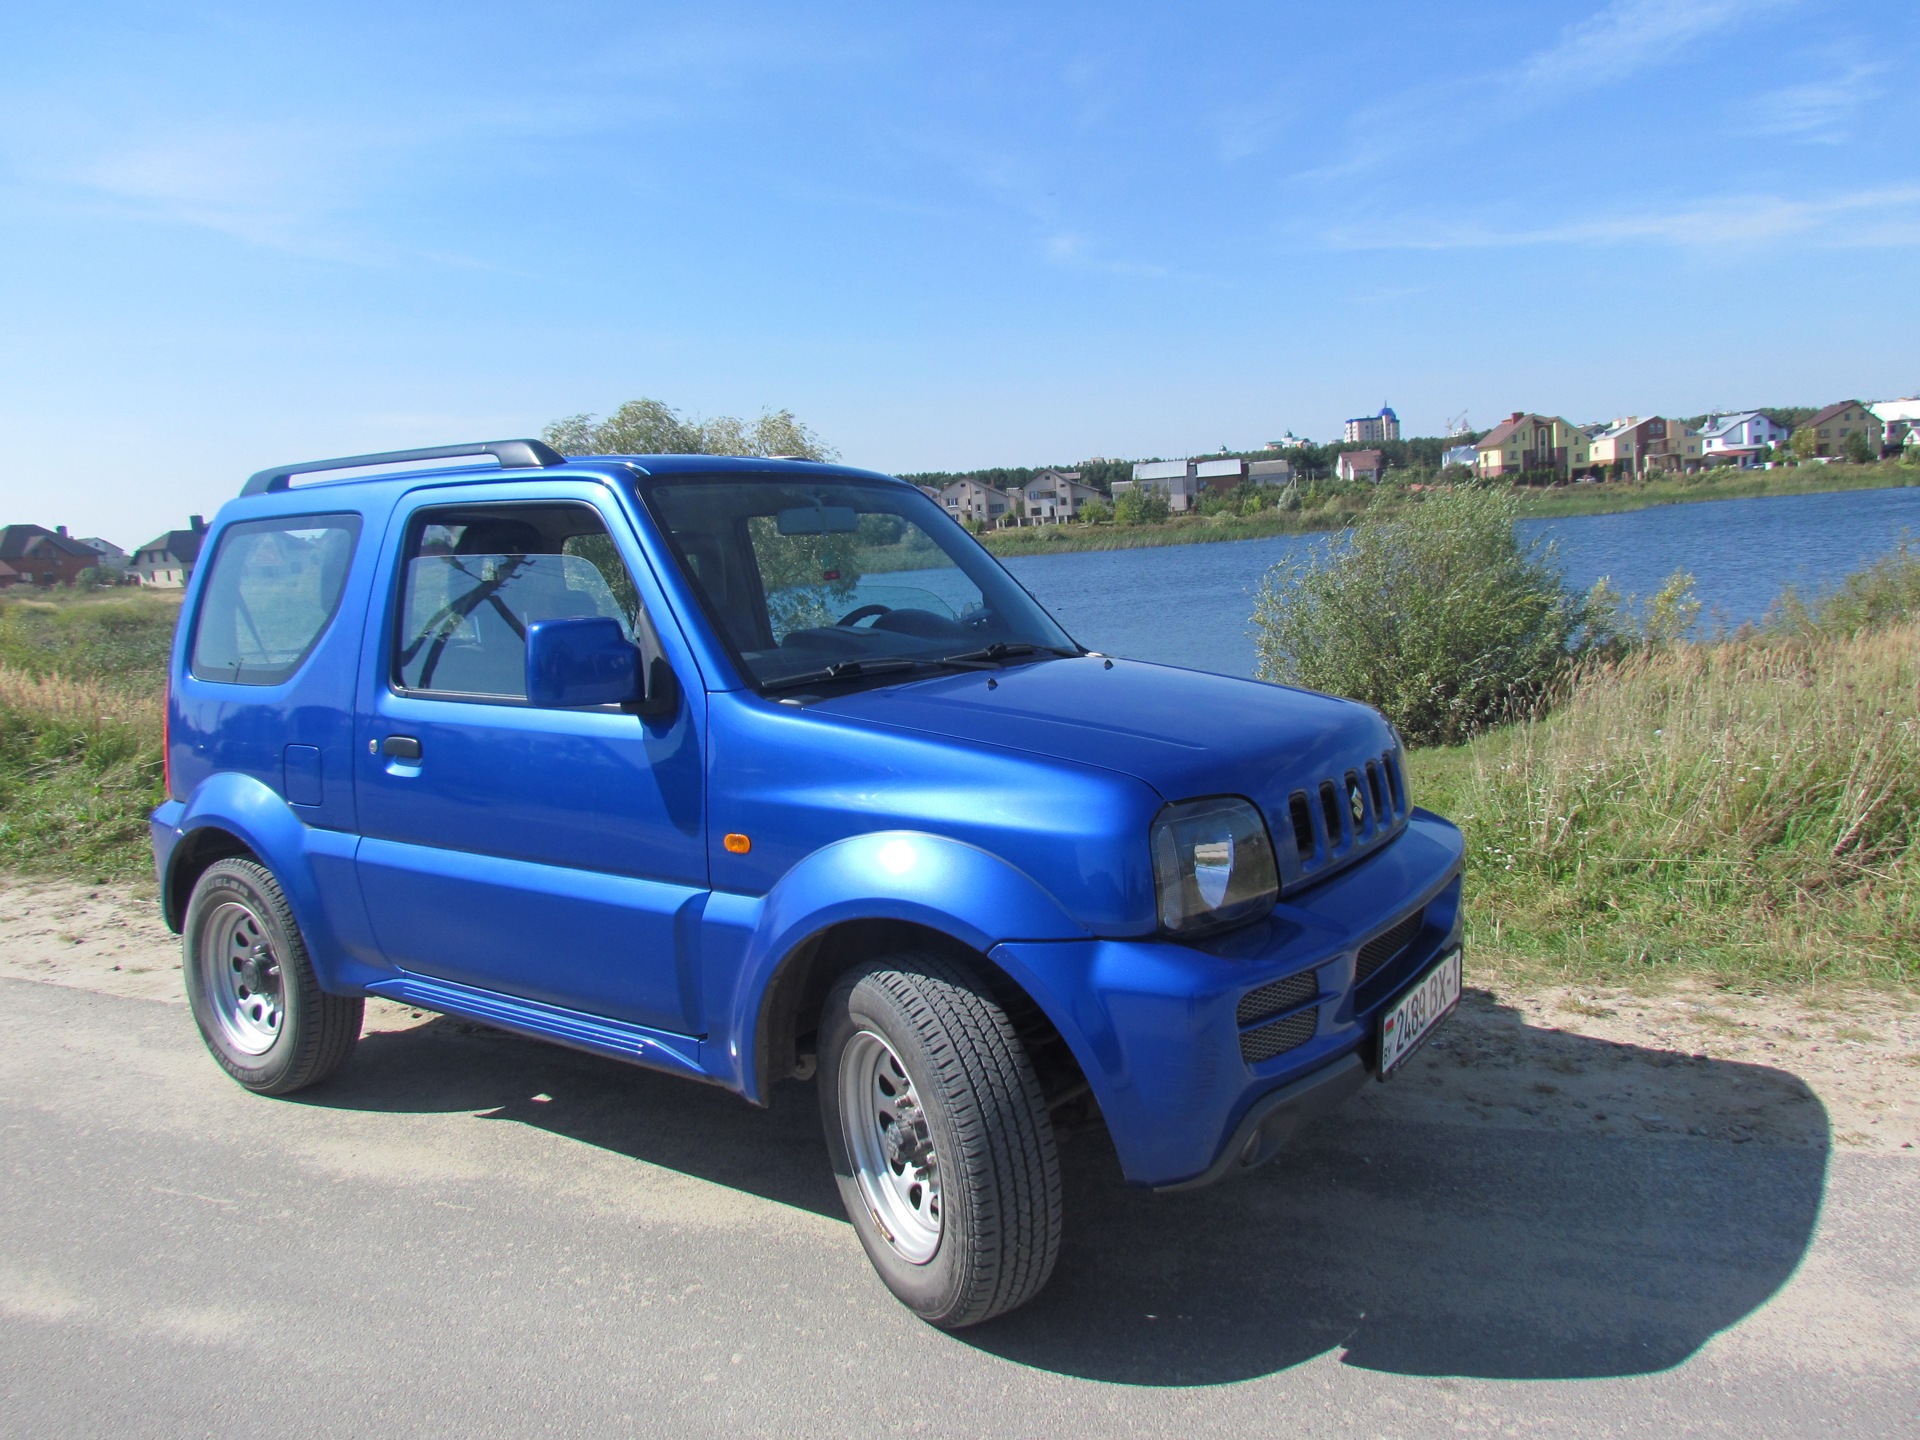 Джимни 1.3. Suzuki Jimny синий. Сузуки Джимни 2008 синий. Suzuki Jimny 1.3. Suzuki Jimny 1998 голубая.